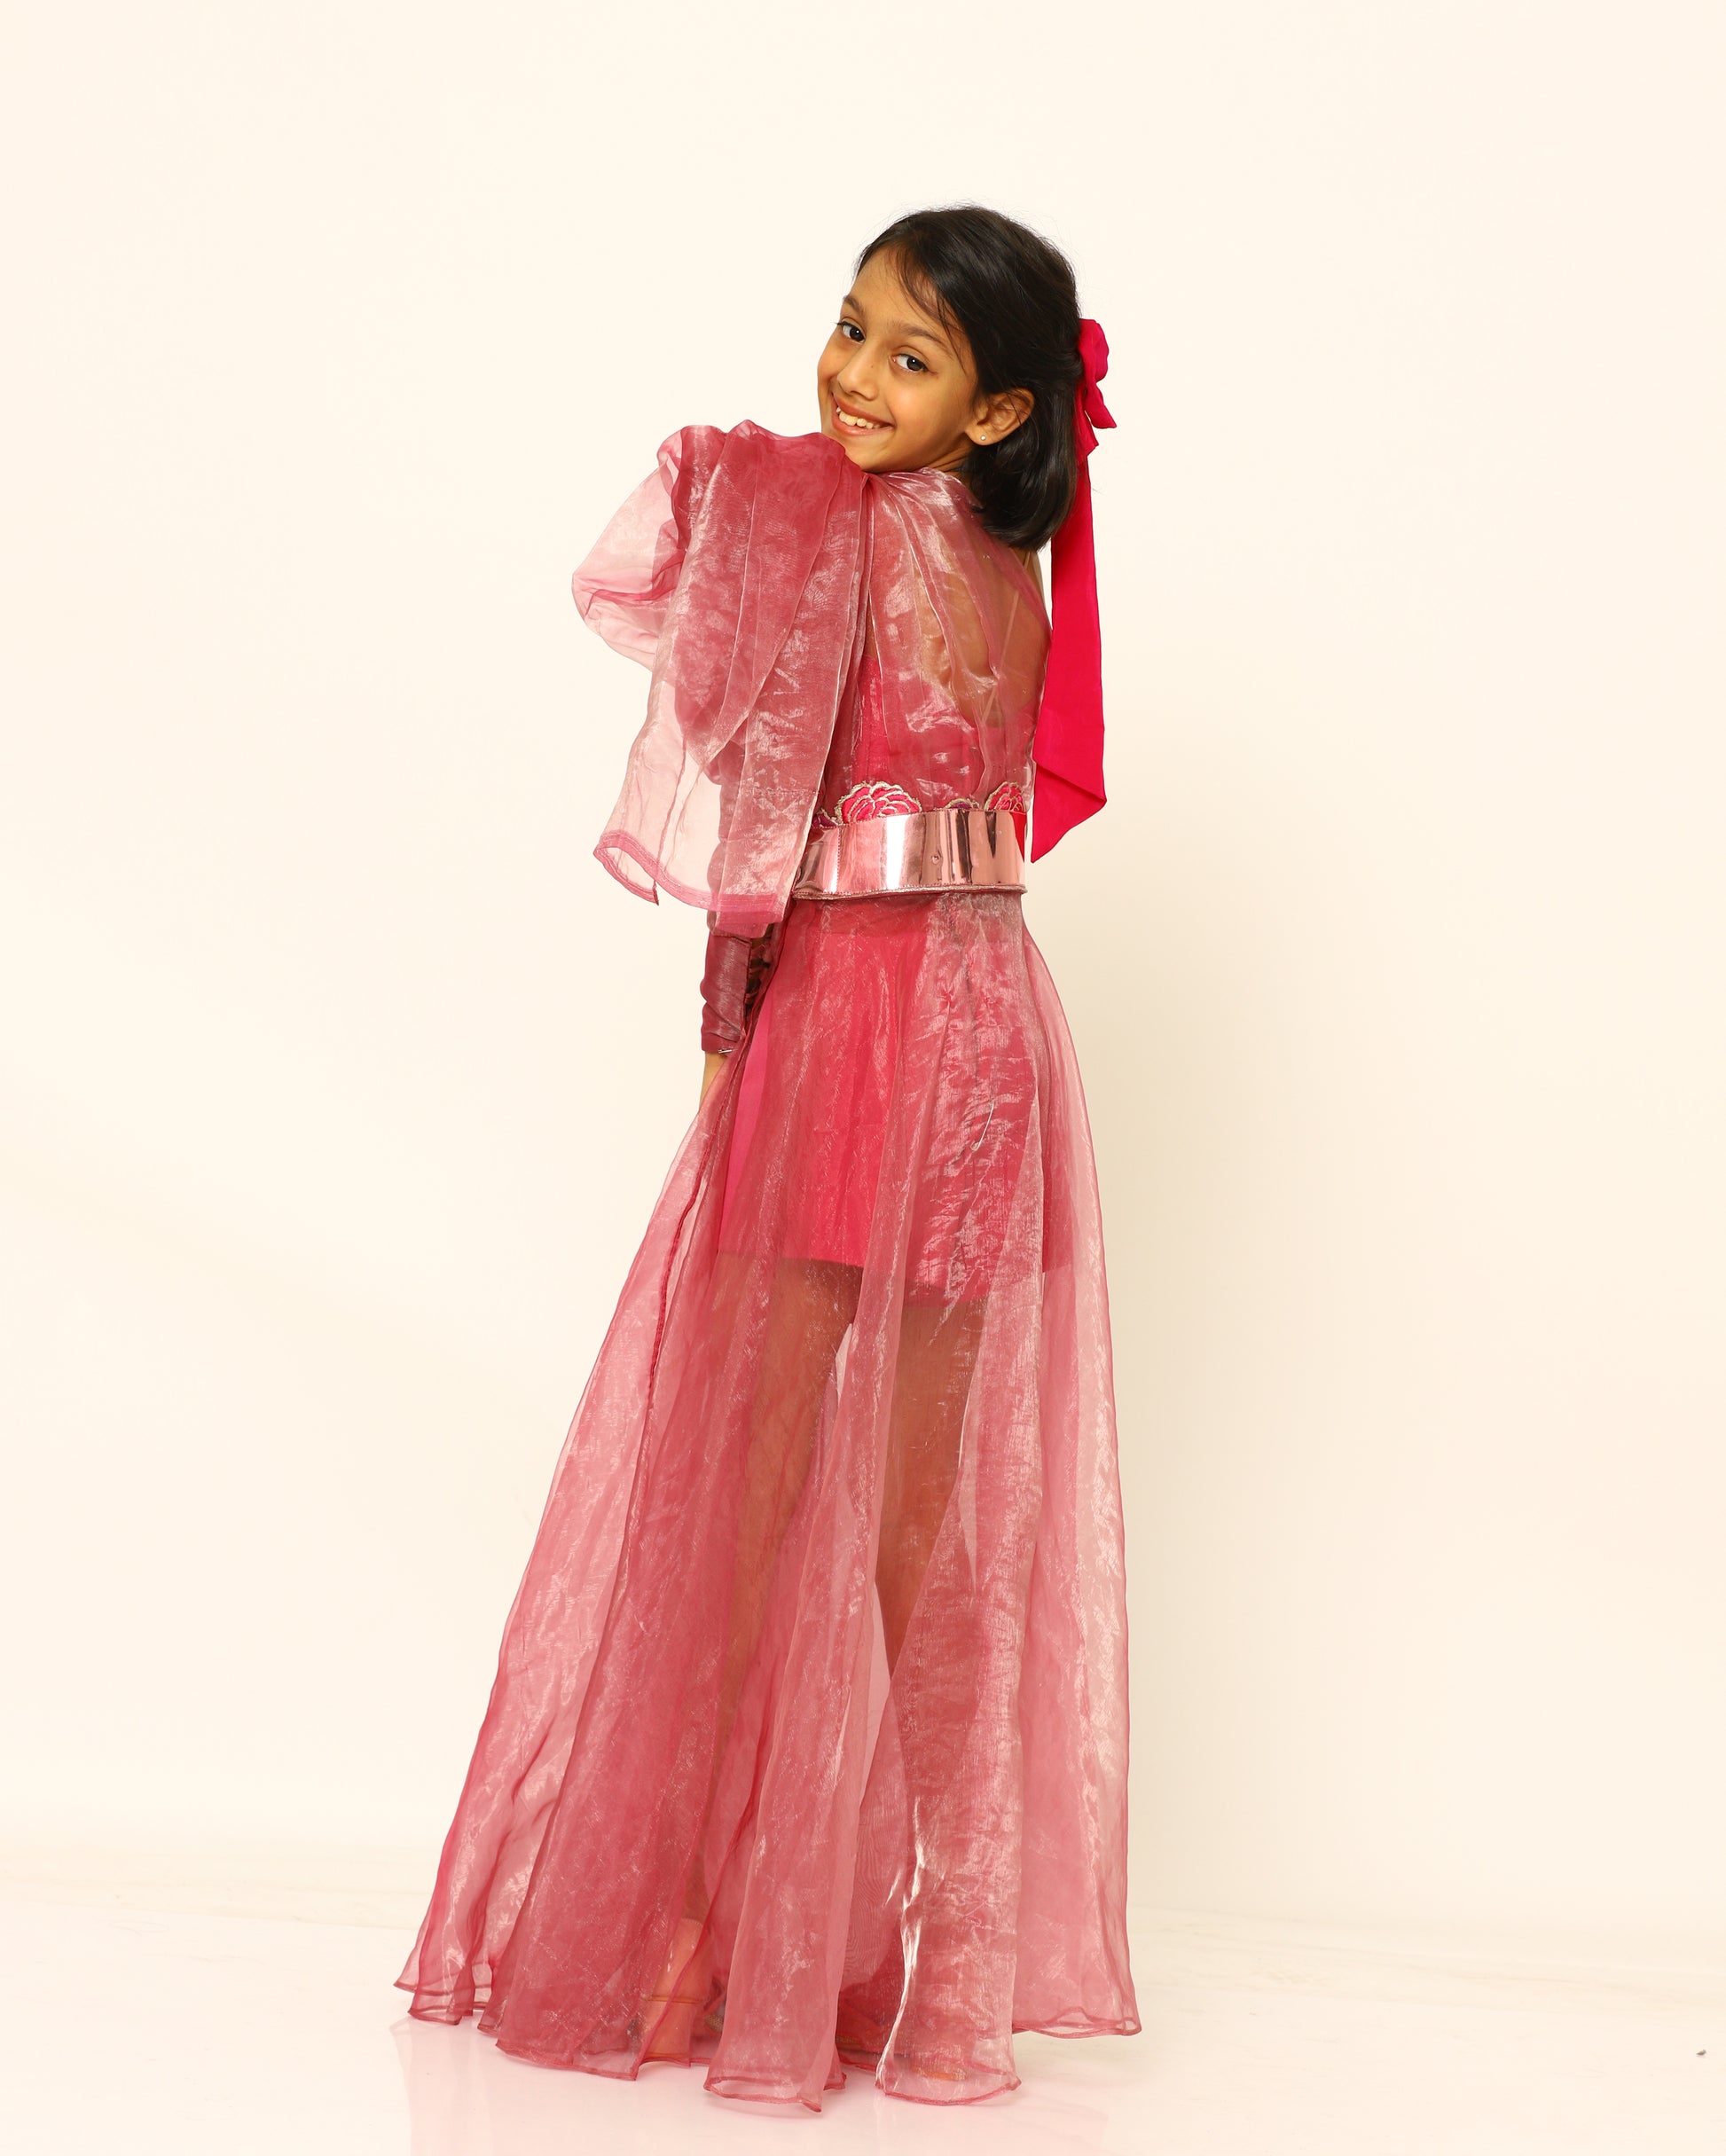 cerise + pink + rose + princess + organza + soft + belt + bow + jumpsuit + shoes +  disney + party + slay + gorgeous + half + back